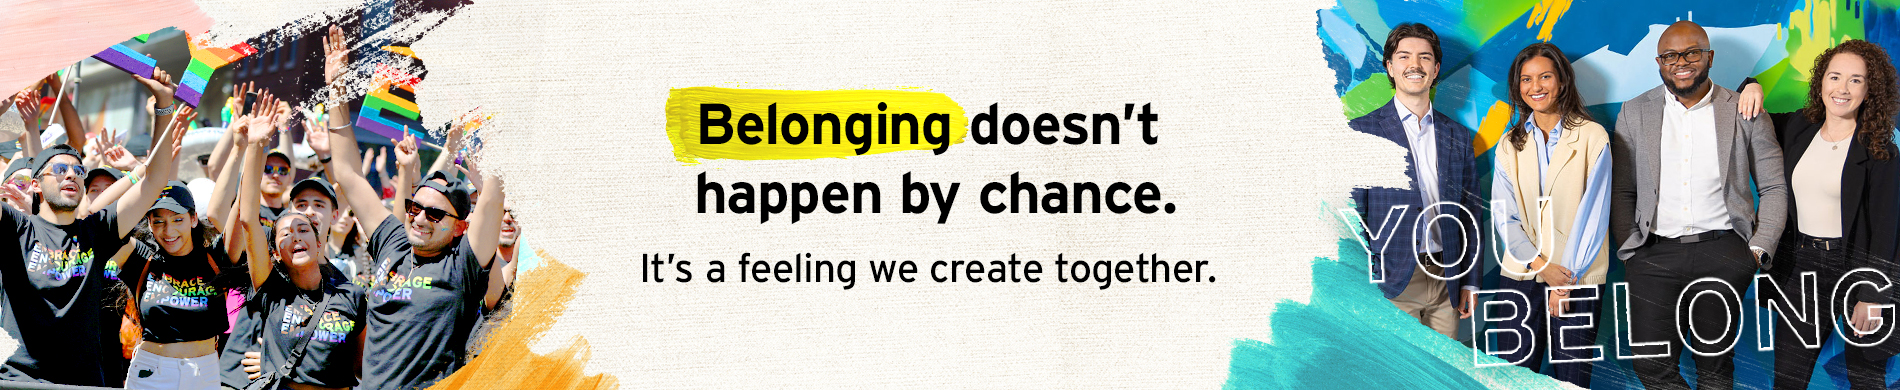 Belonging doesn't happen by chance.